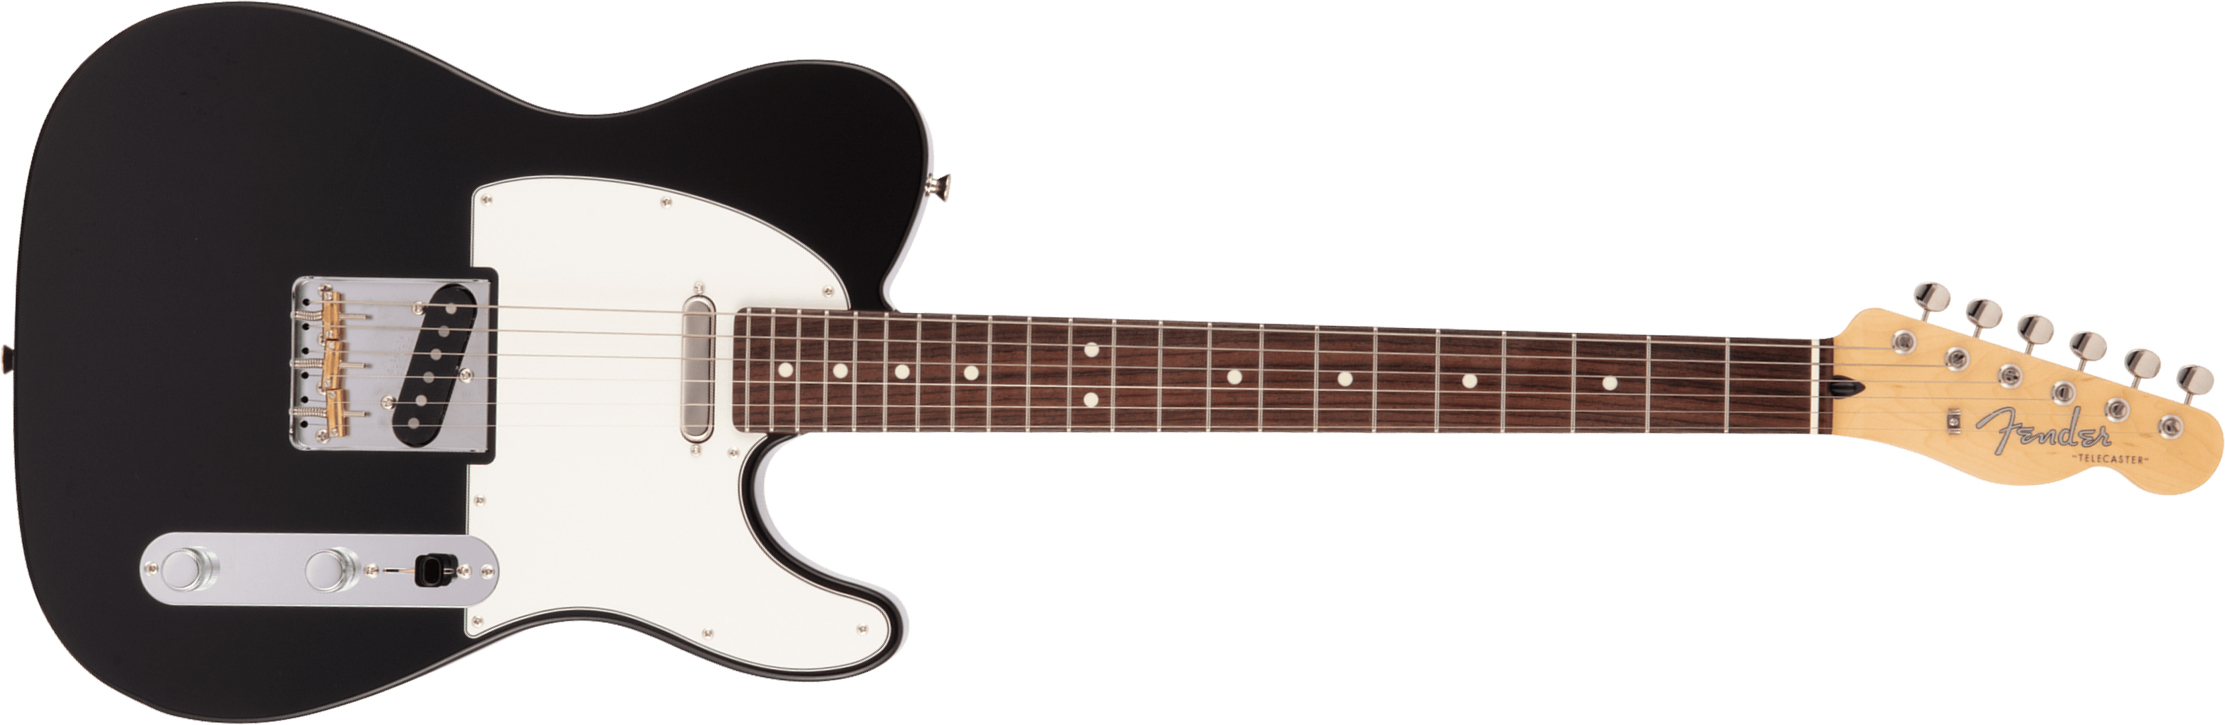 Fender Tele Hybrid Ii Jap 2s Ht Mn - Black - Guitarra eléctrica con forma de tel - Main picture